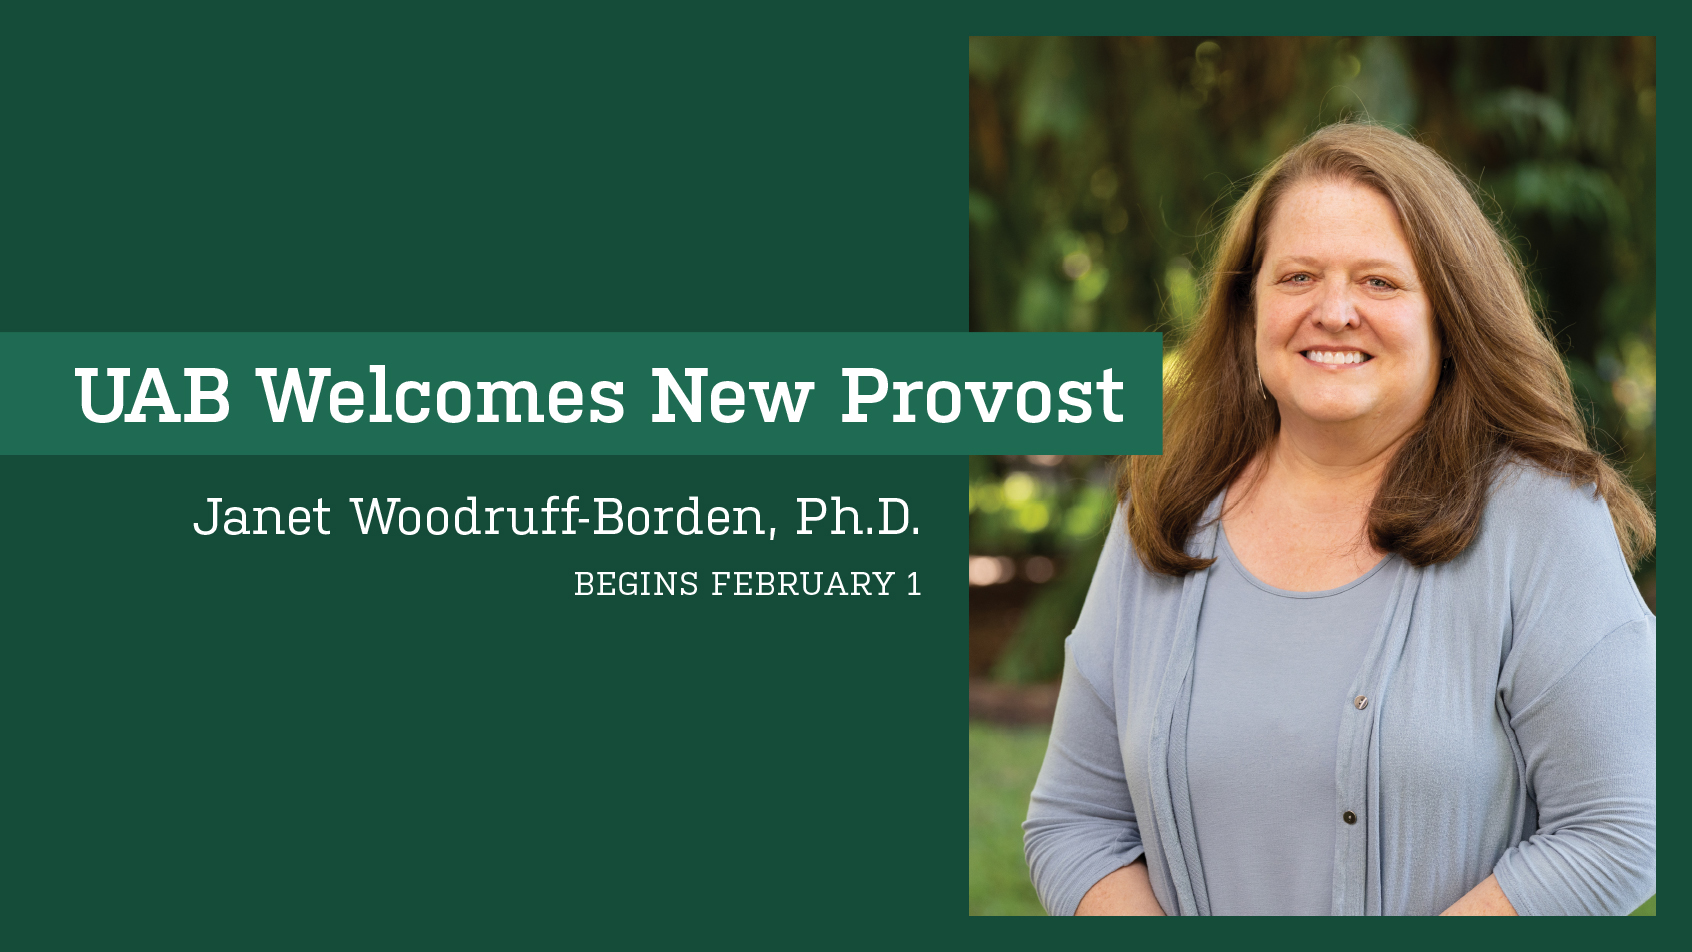 UAB welcomes new provost Janet Woodruff-Borden, Ph.D., beginning February 1